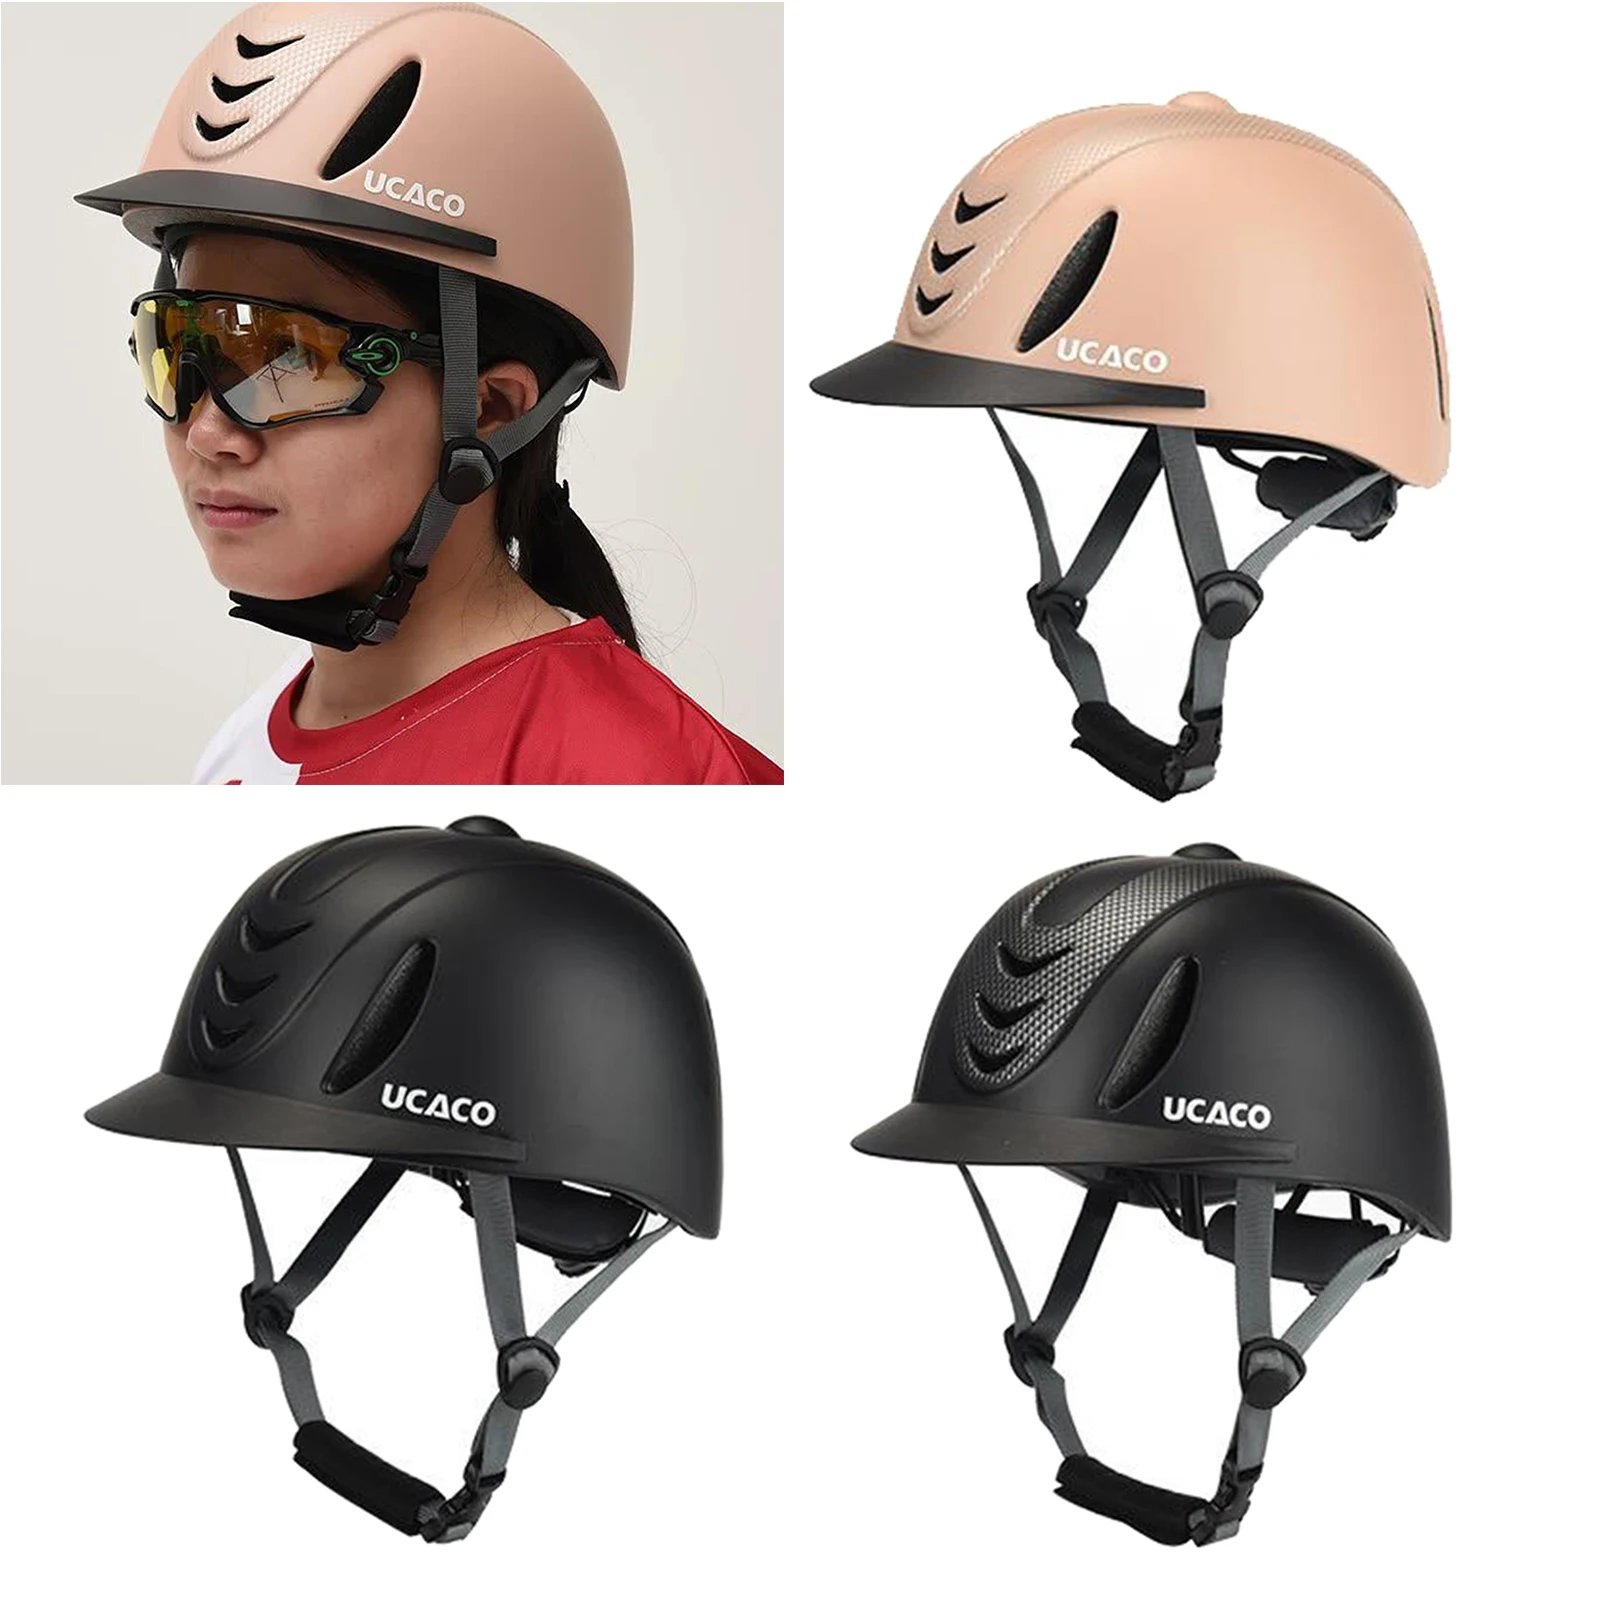 Adjustable Safety Horse Riding Hat/Helmet Size 56 Includes Bag 